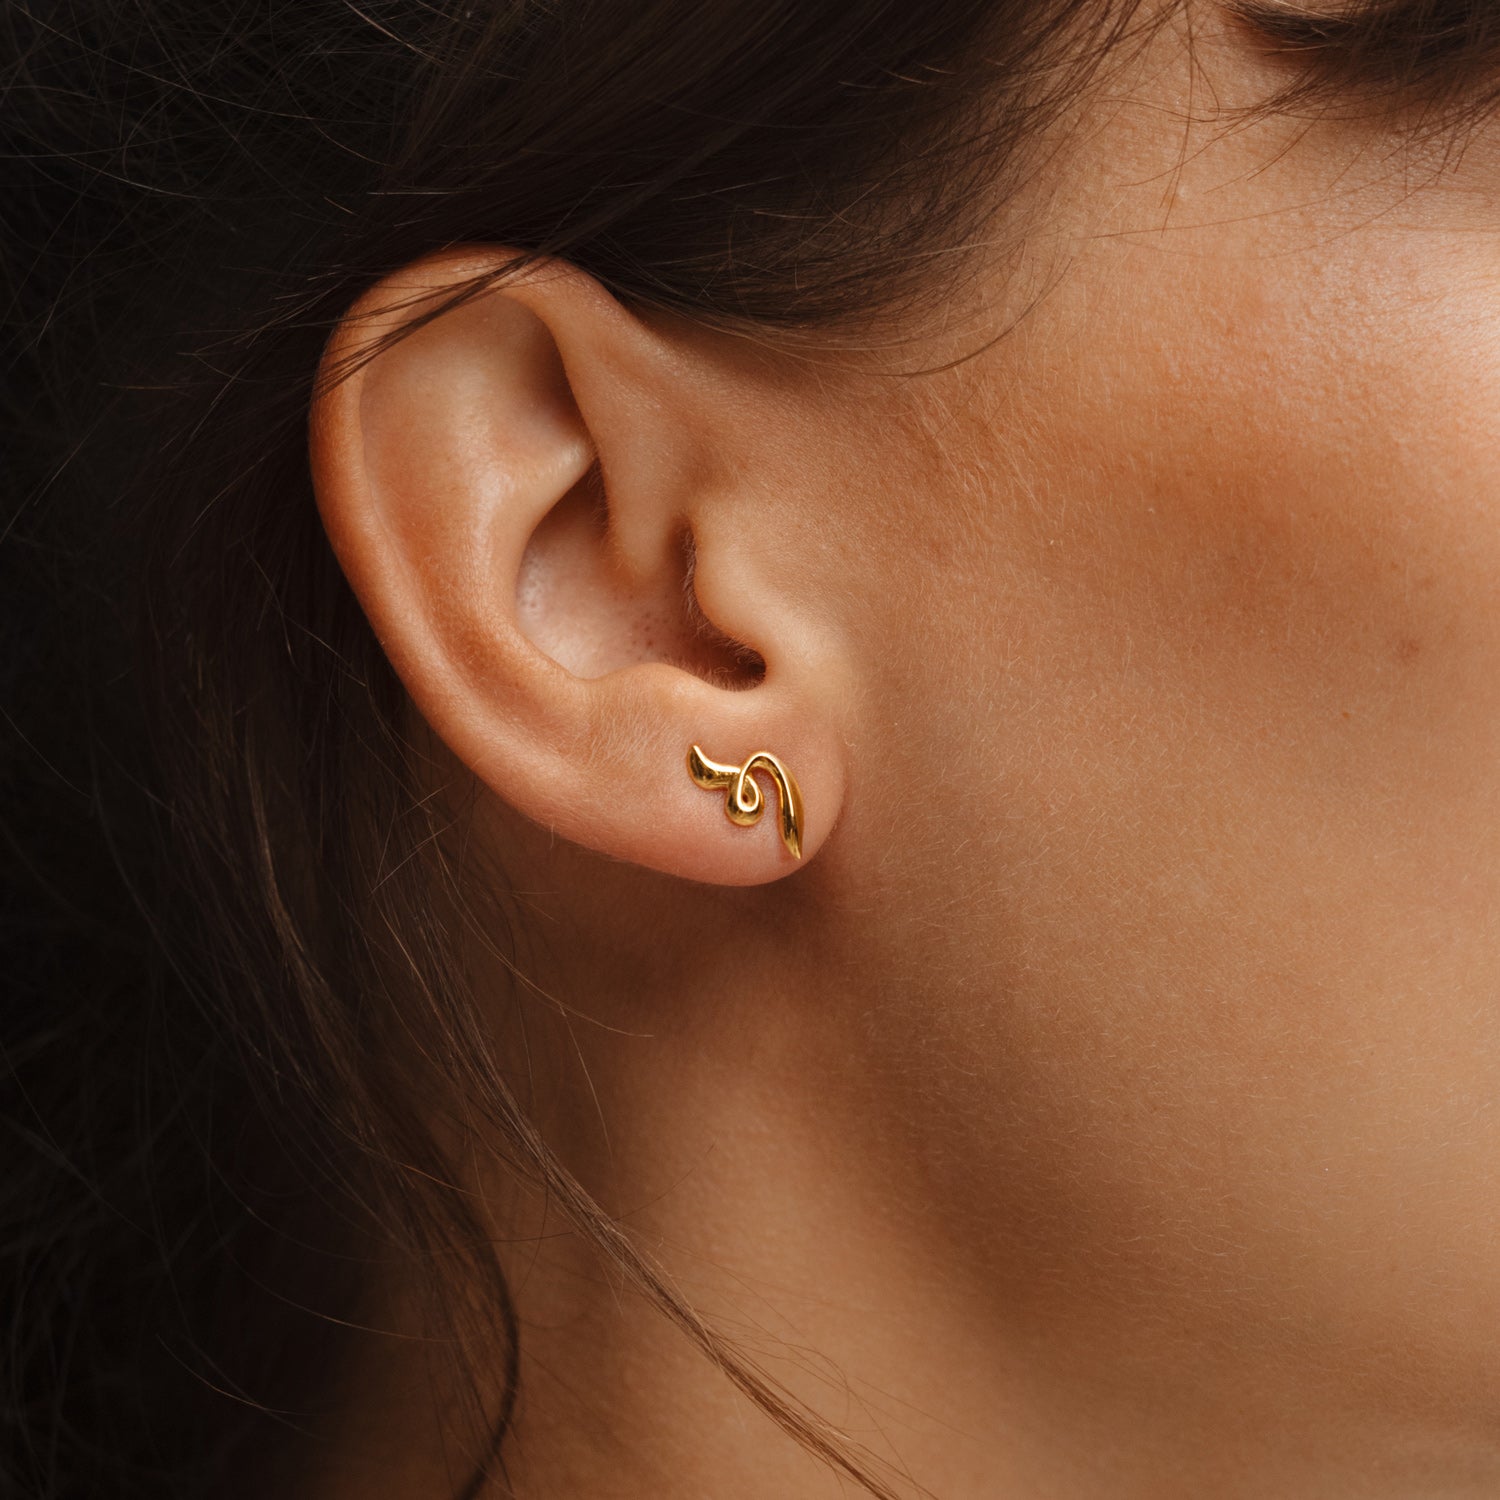 Poise Twirl Stud Earrings, recycled 18k Gold Vermeil, shown on ear - VEYIA Berlin